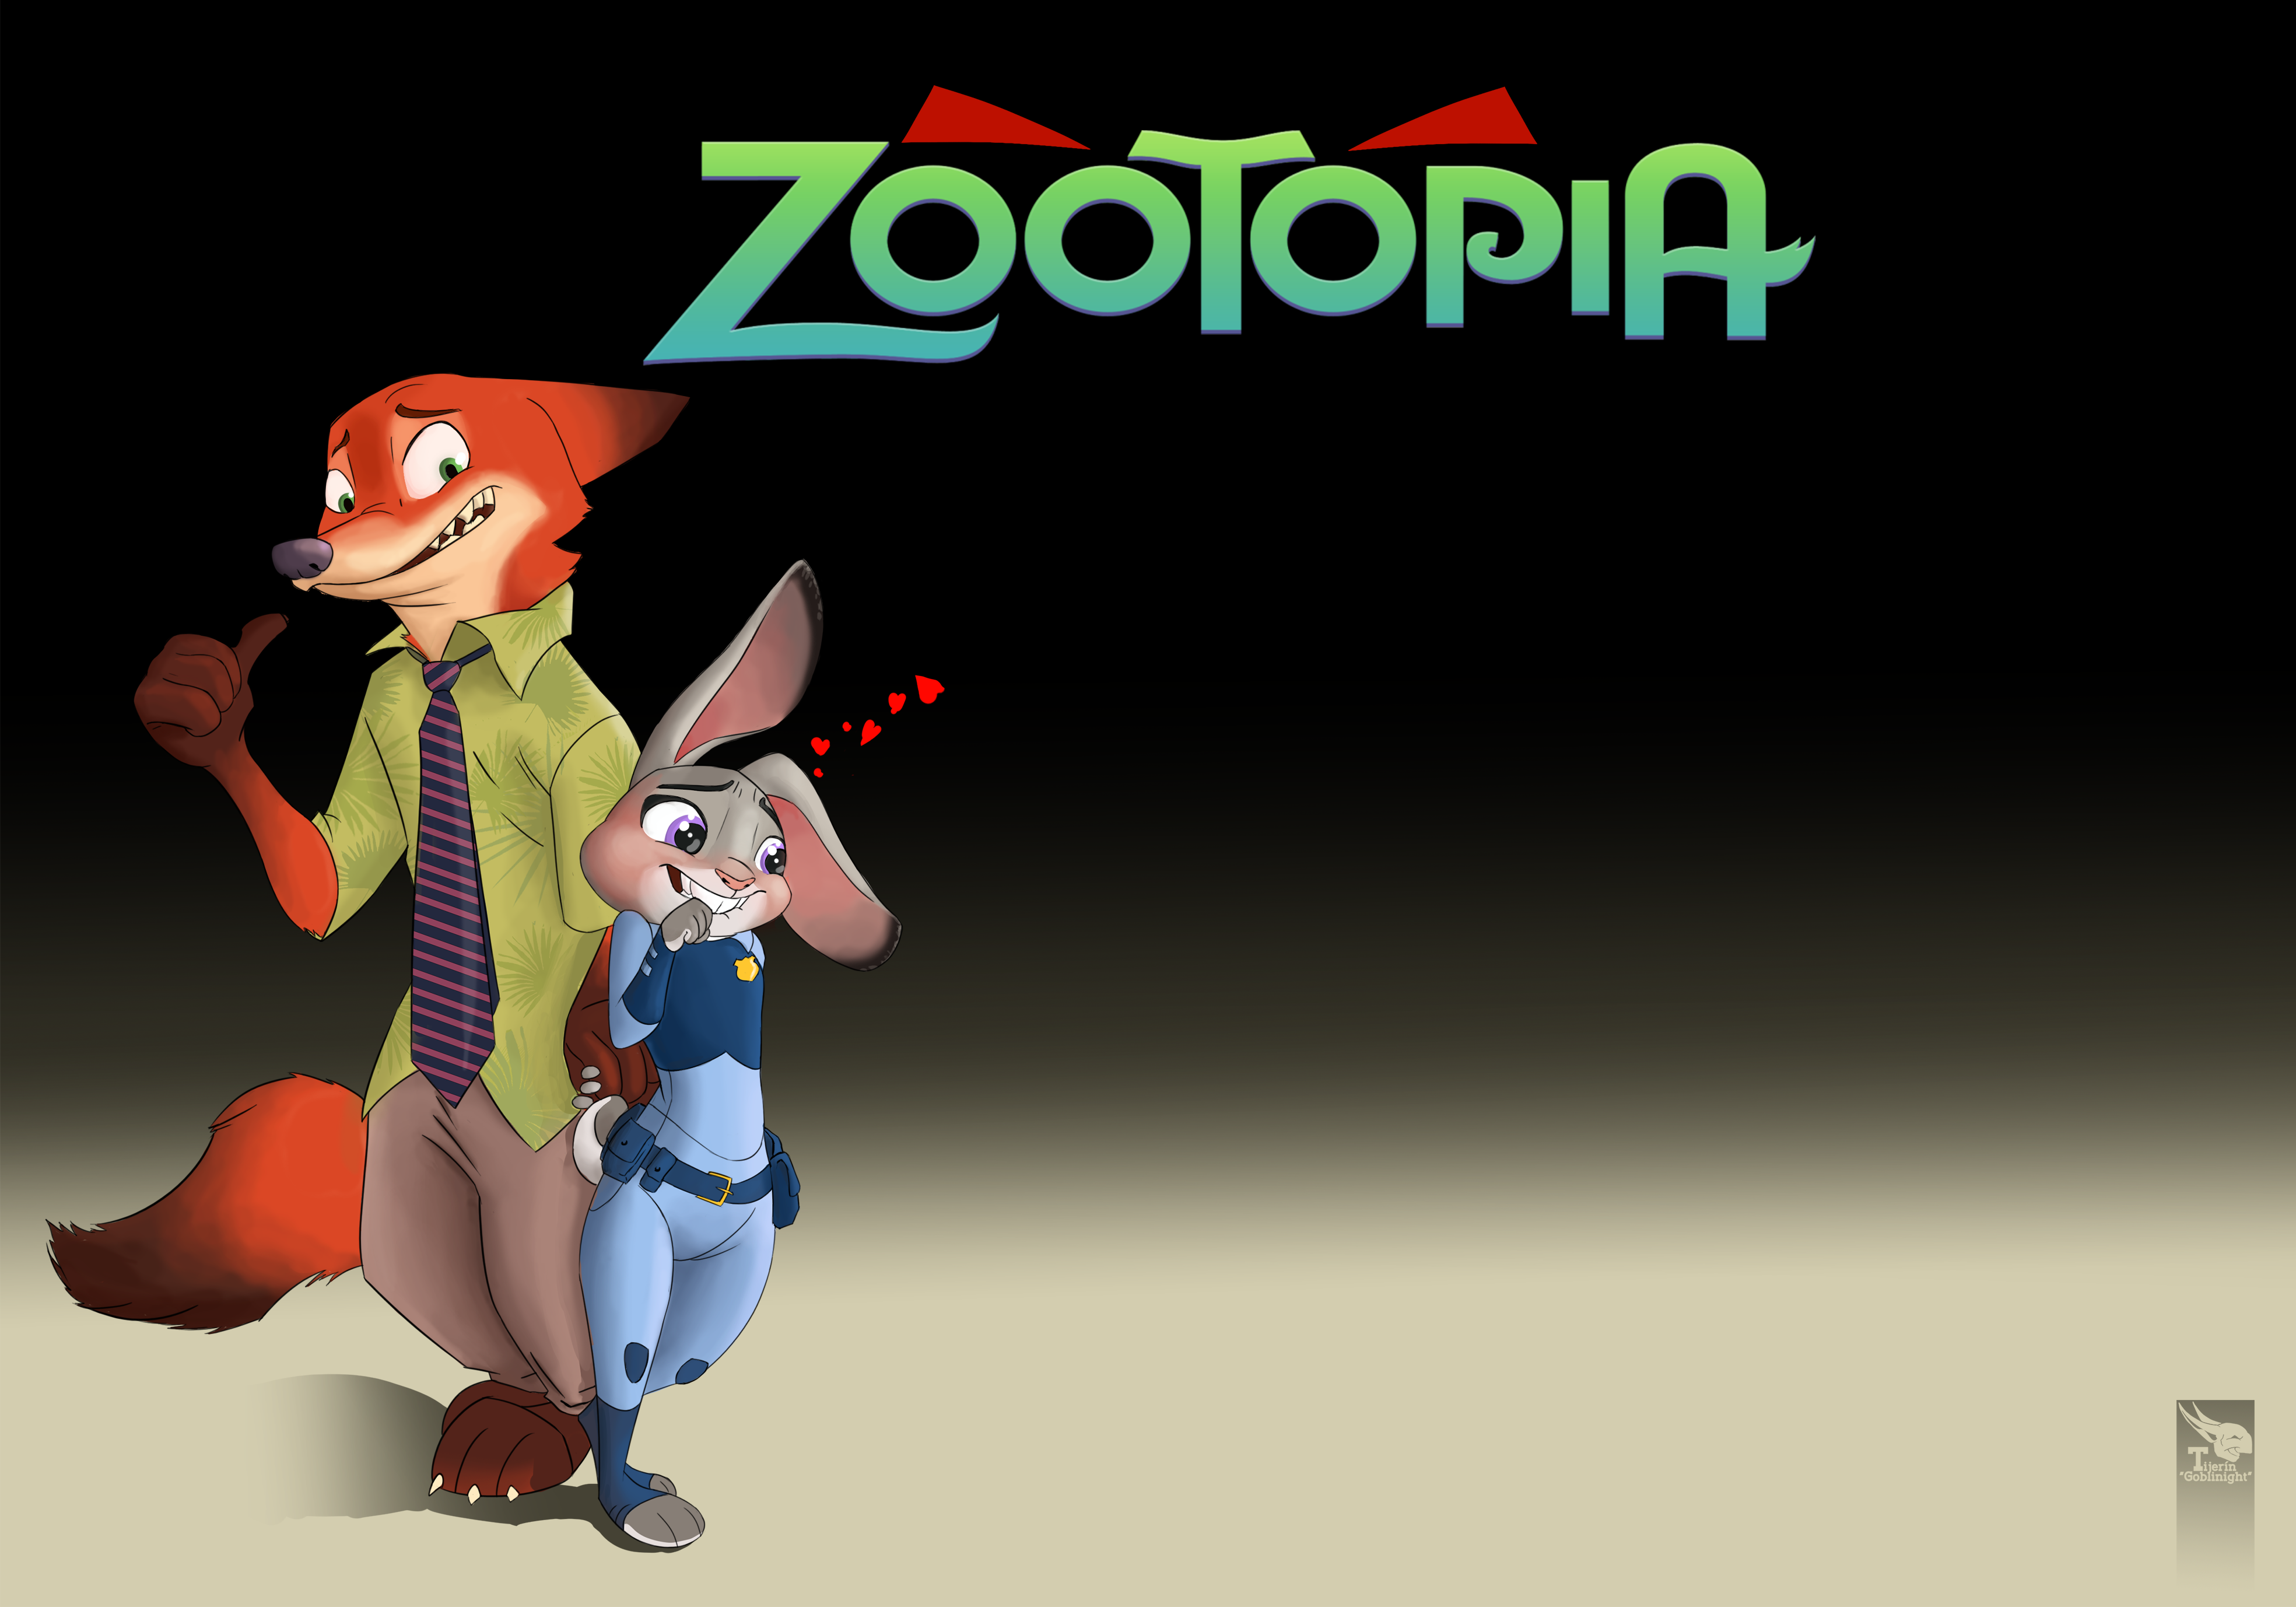 Movie Zootopia 4k Ultra HD Wallpaper by José Antonio Tijerín